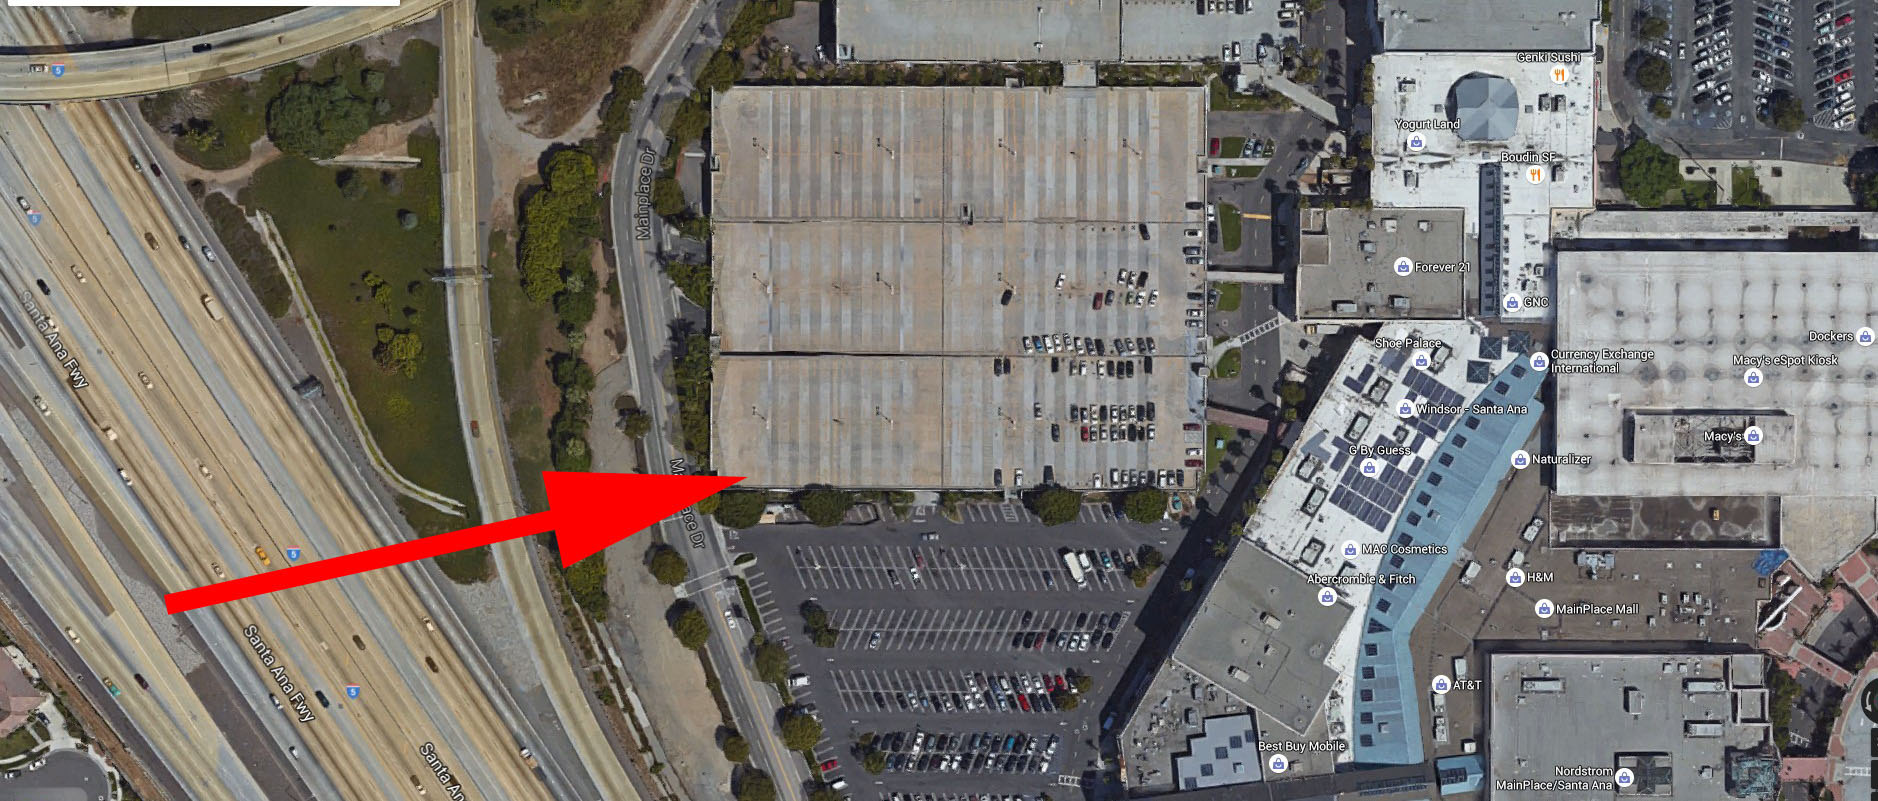 MainPlace Mall Tesla Supercharger Location.jpg